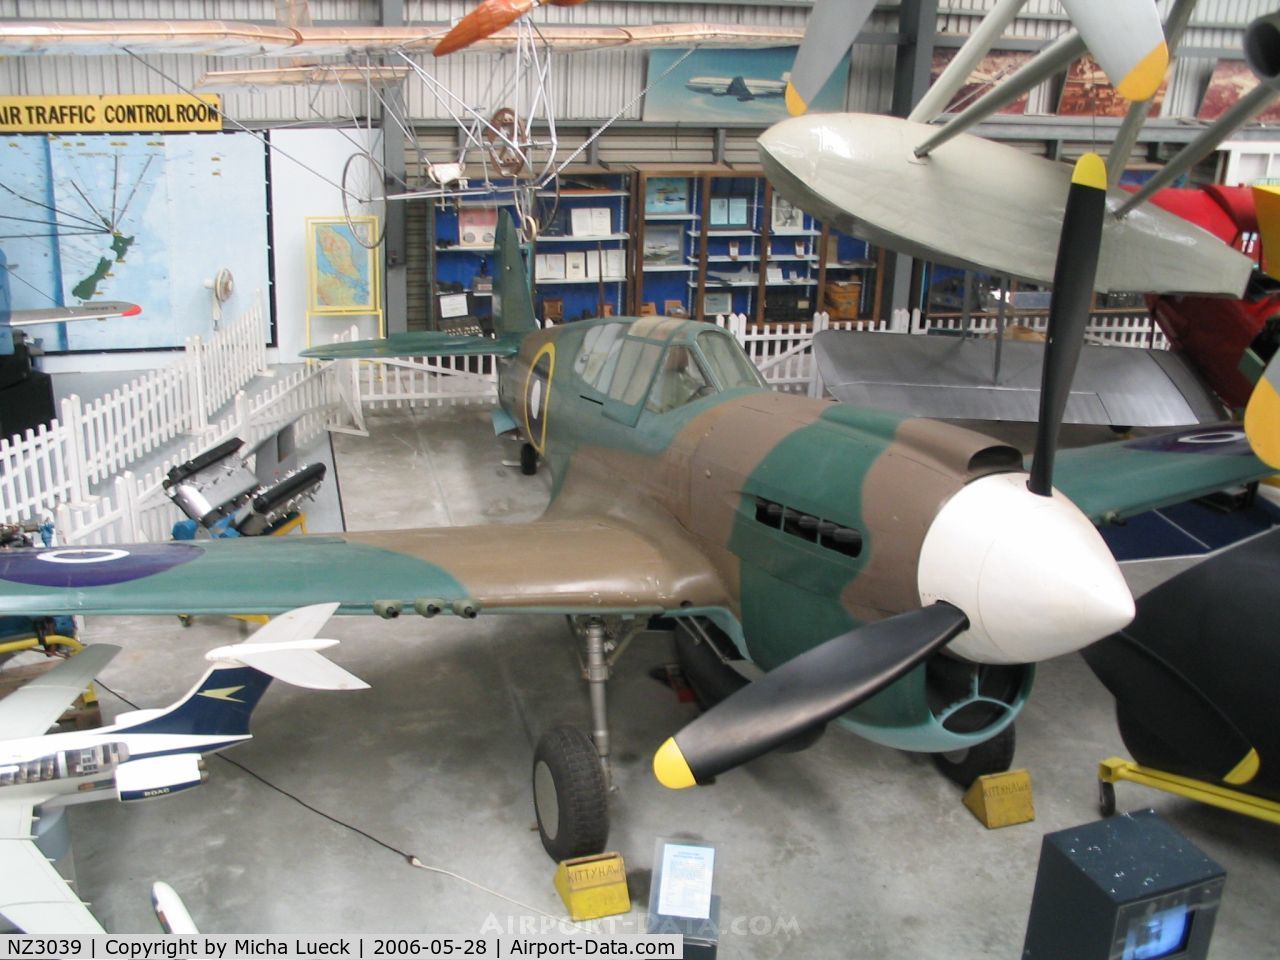 NZ3039, Curtiss P-40E Kittyhawk C/N Not found NZ3039, Curtiss P40-E Kittyhawk, preserved at the Museum of Transport and Technology (MOTAT) in Auckland, New Zealand.